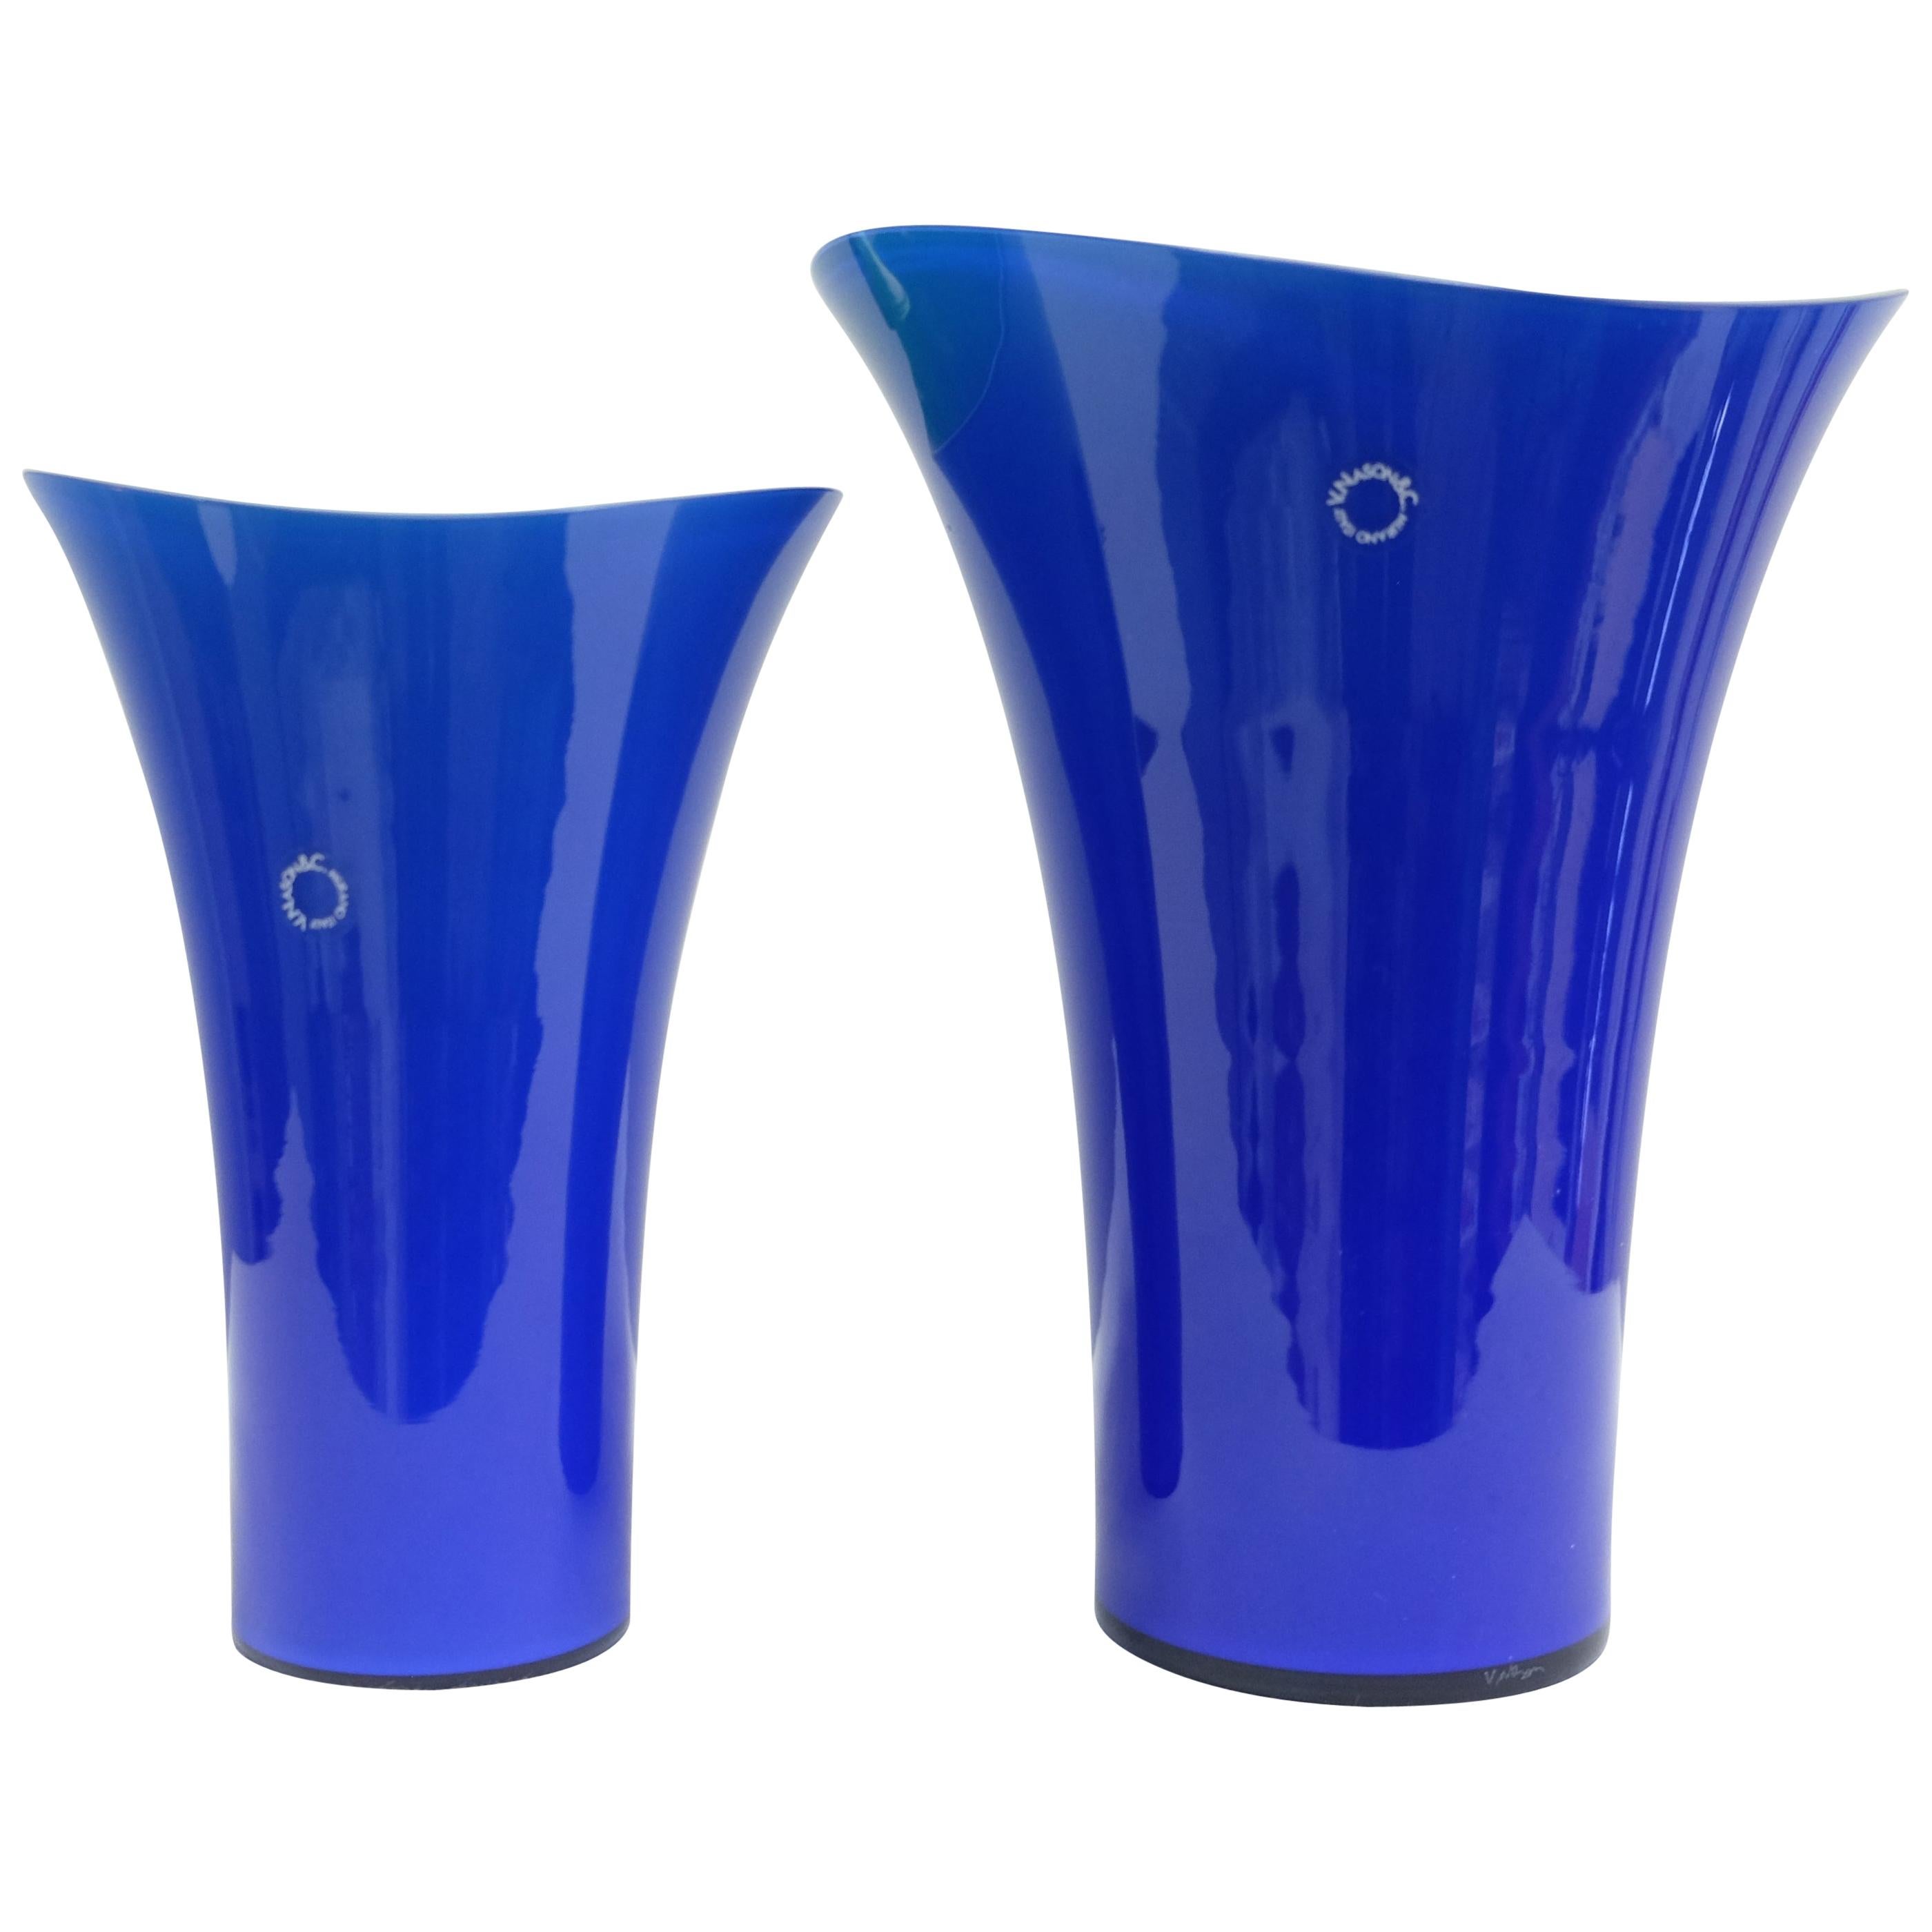 Murano Glass Vase Set by V. Nason & C. Italy, Blue and Green Asymmetric Vases